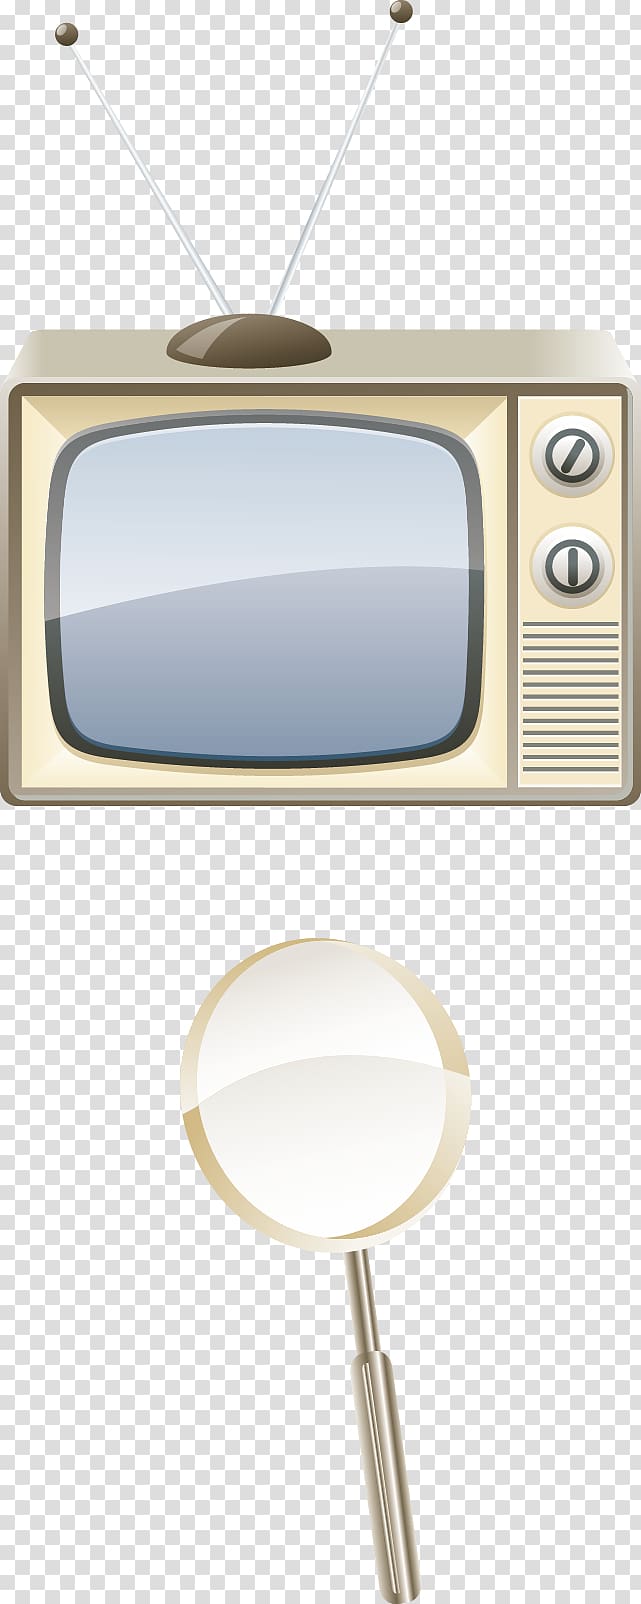 Television set Cartoon, TV magnifier material transparent background PNG clipart